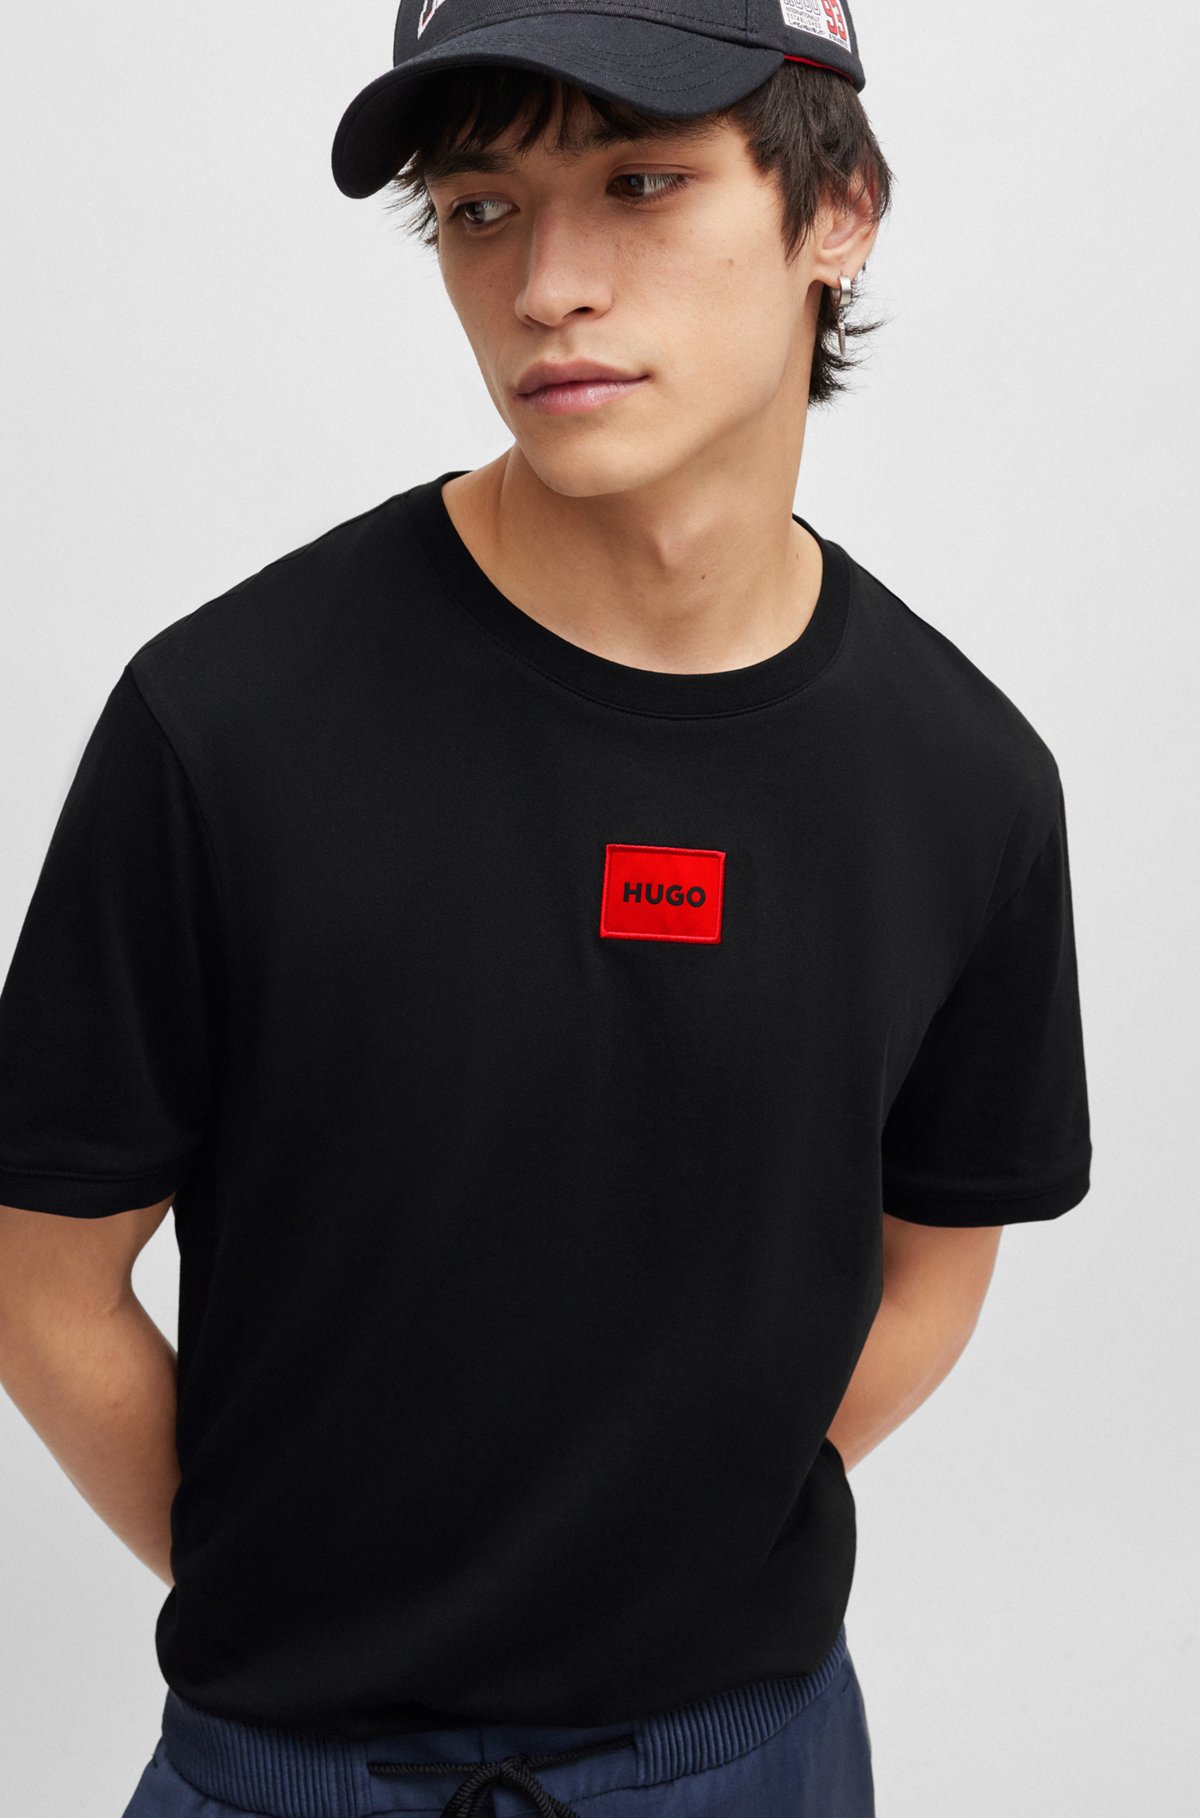 les Thermisch Bevriezen HUGO - Regular-fit cotton T-shirt with red logo label